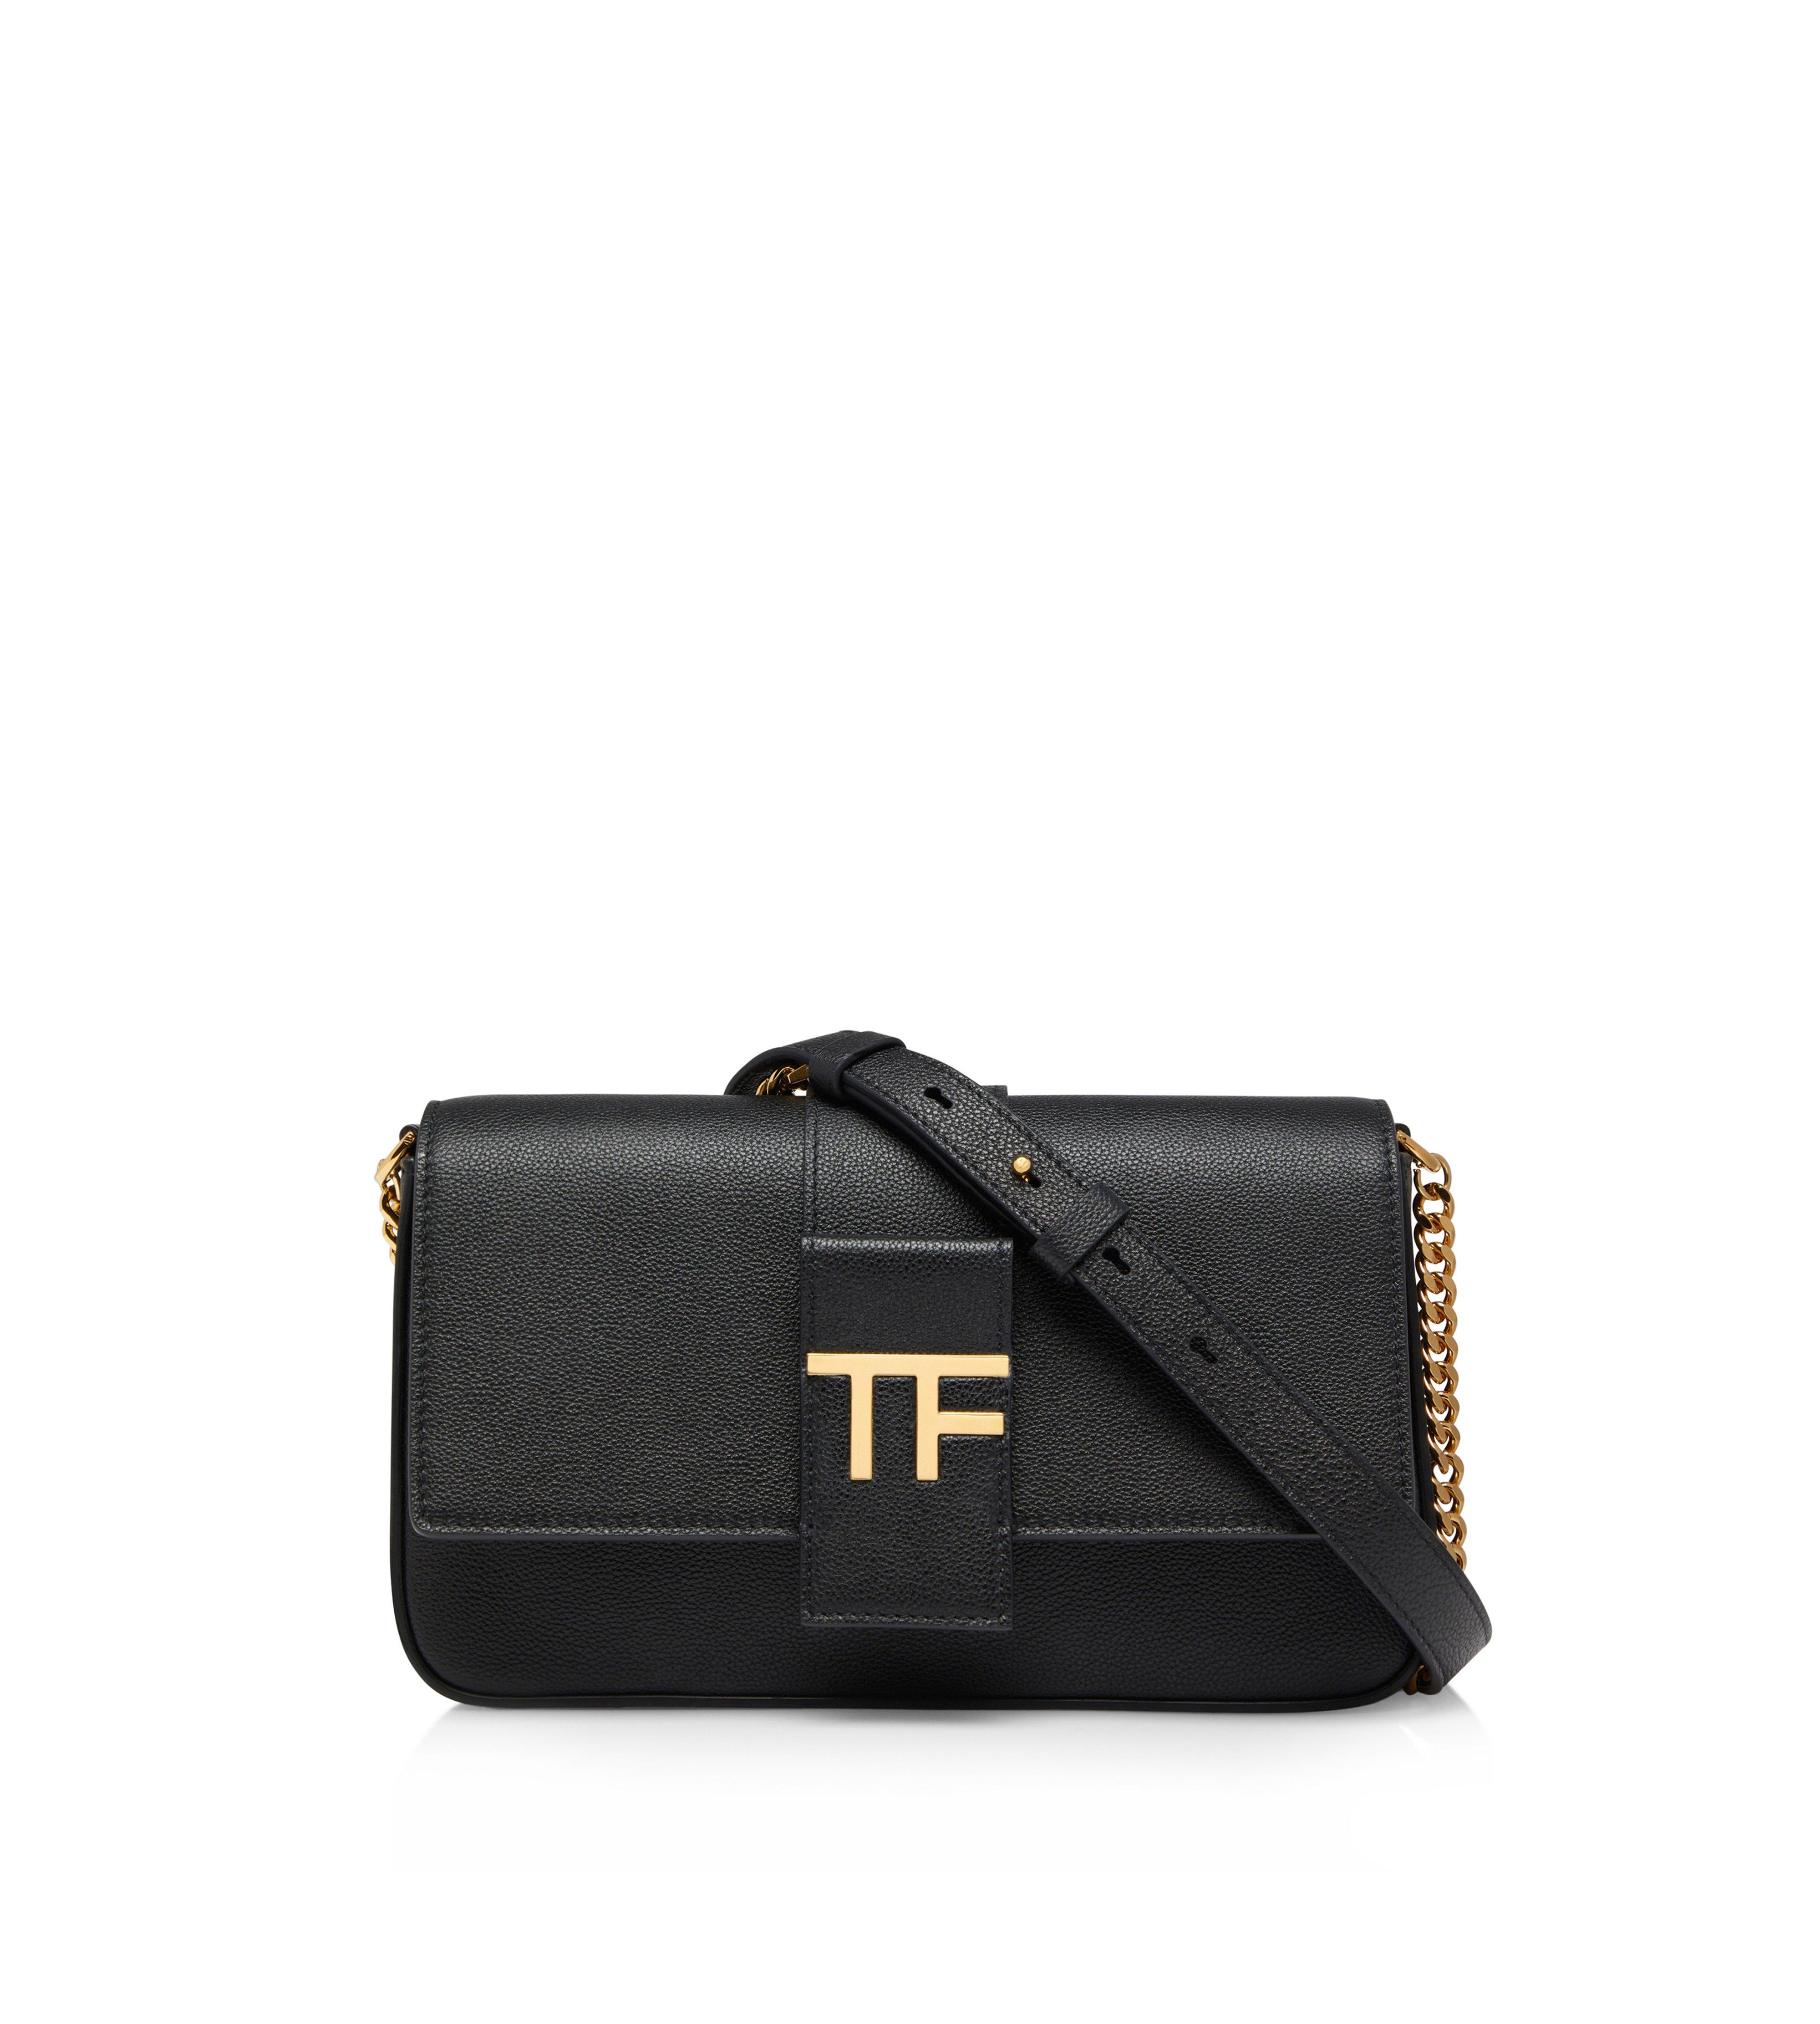 Introducir 93+ imagen tom ford handbags on sale